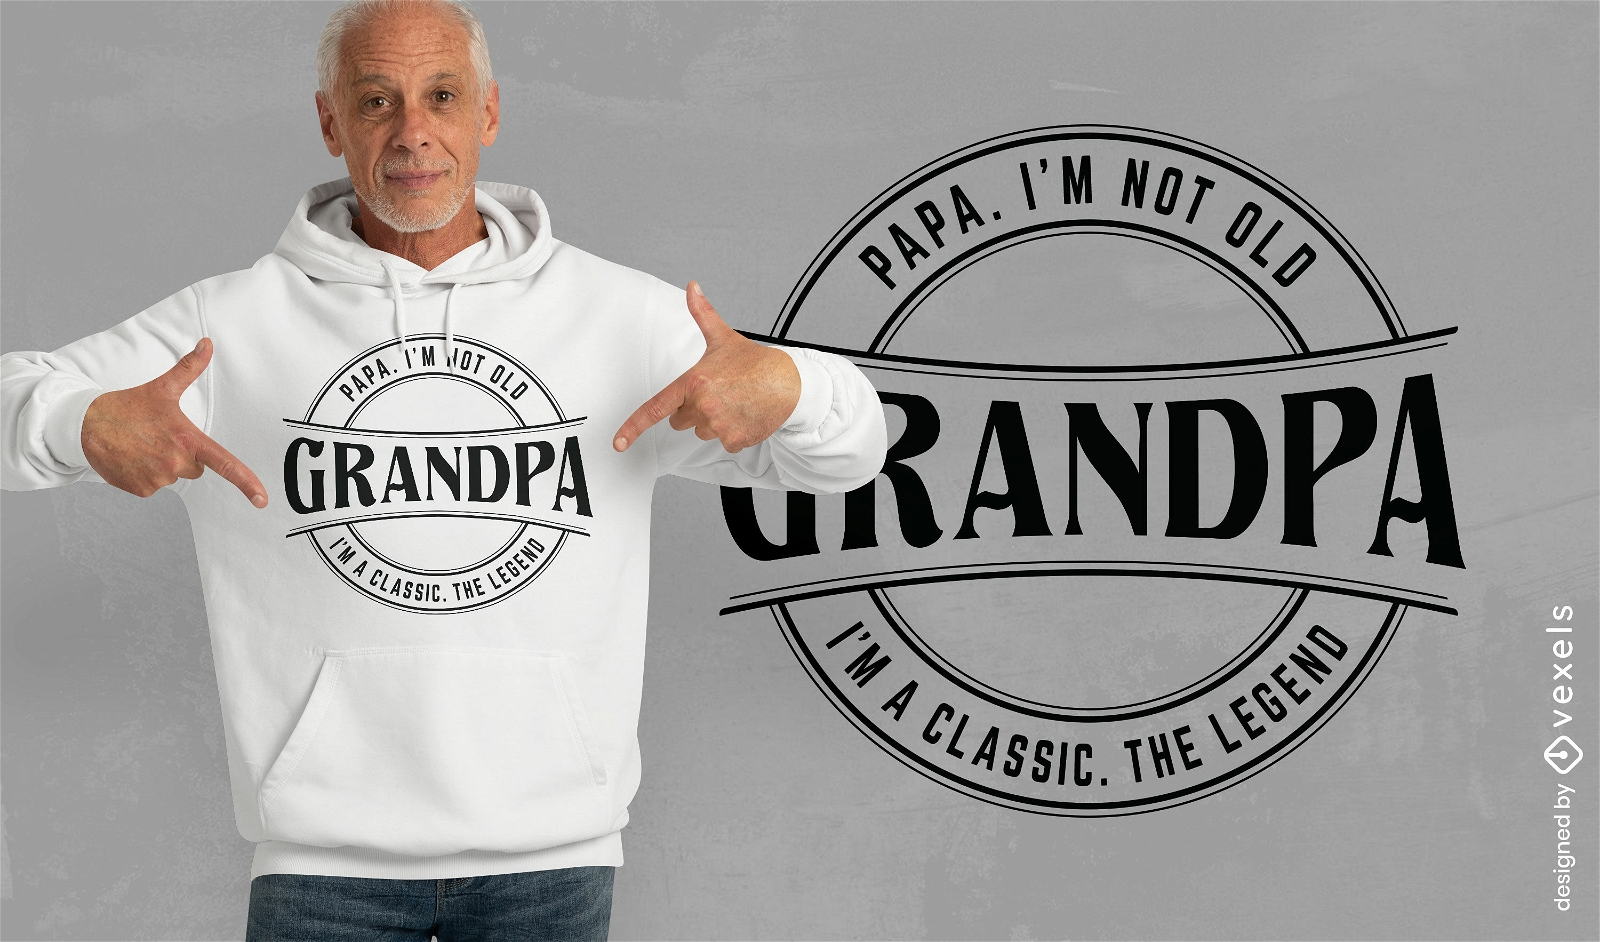 Grandpa classic quote t-shirt design